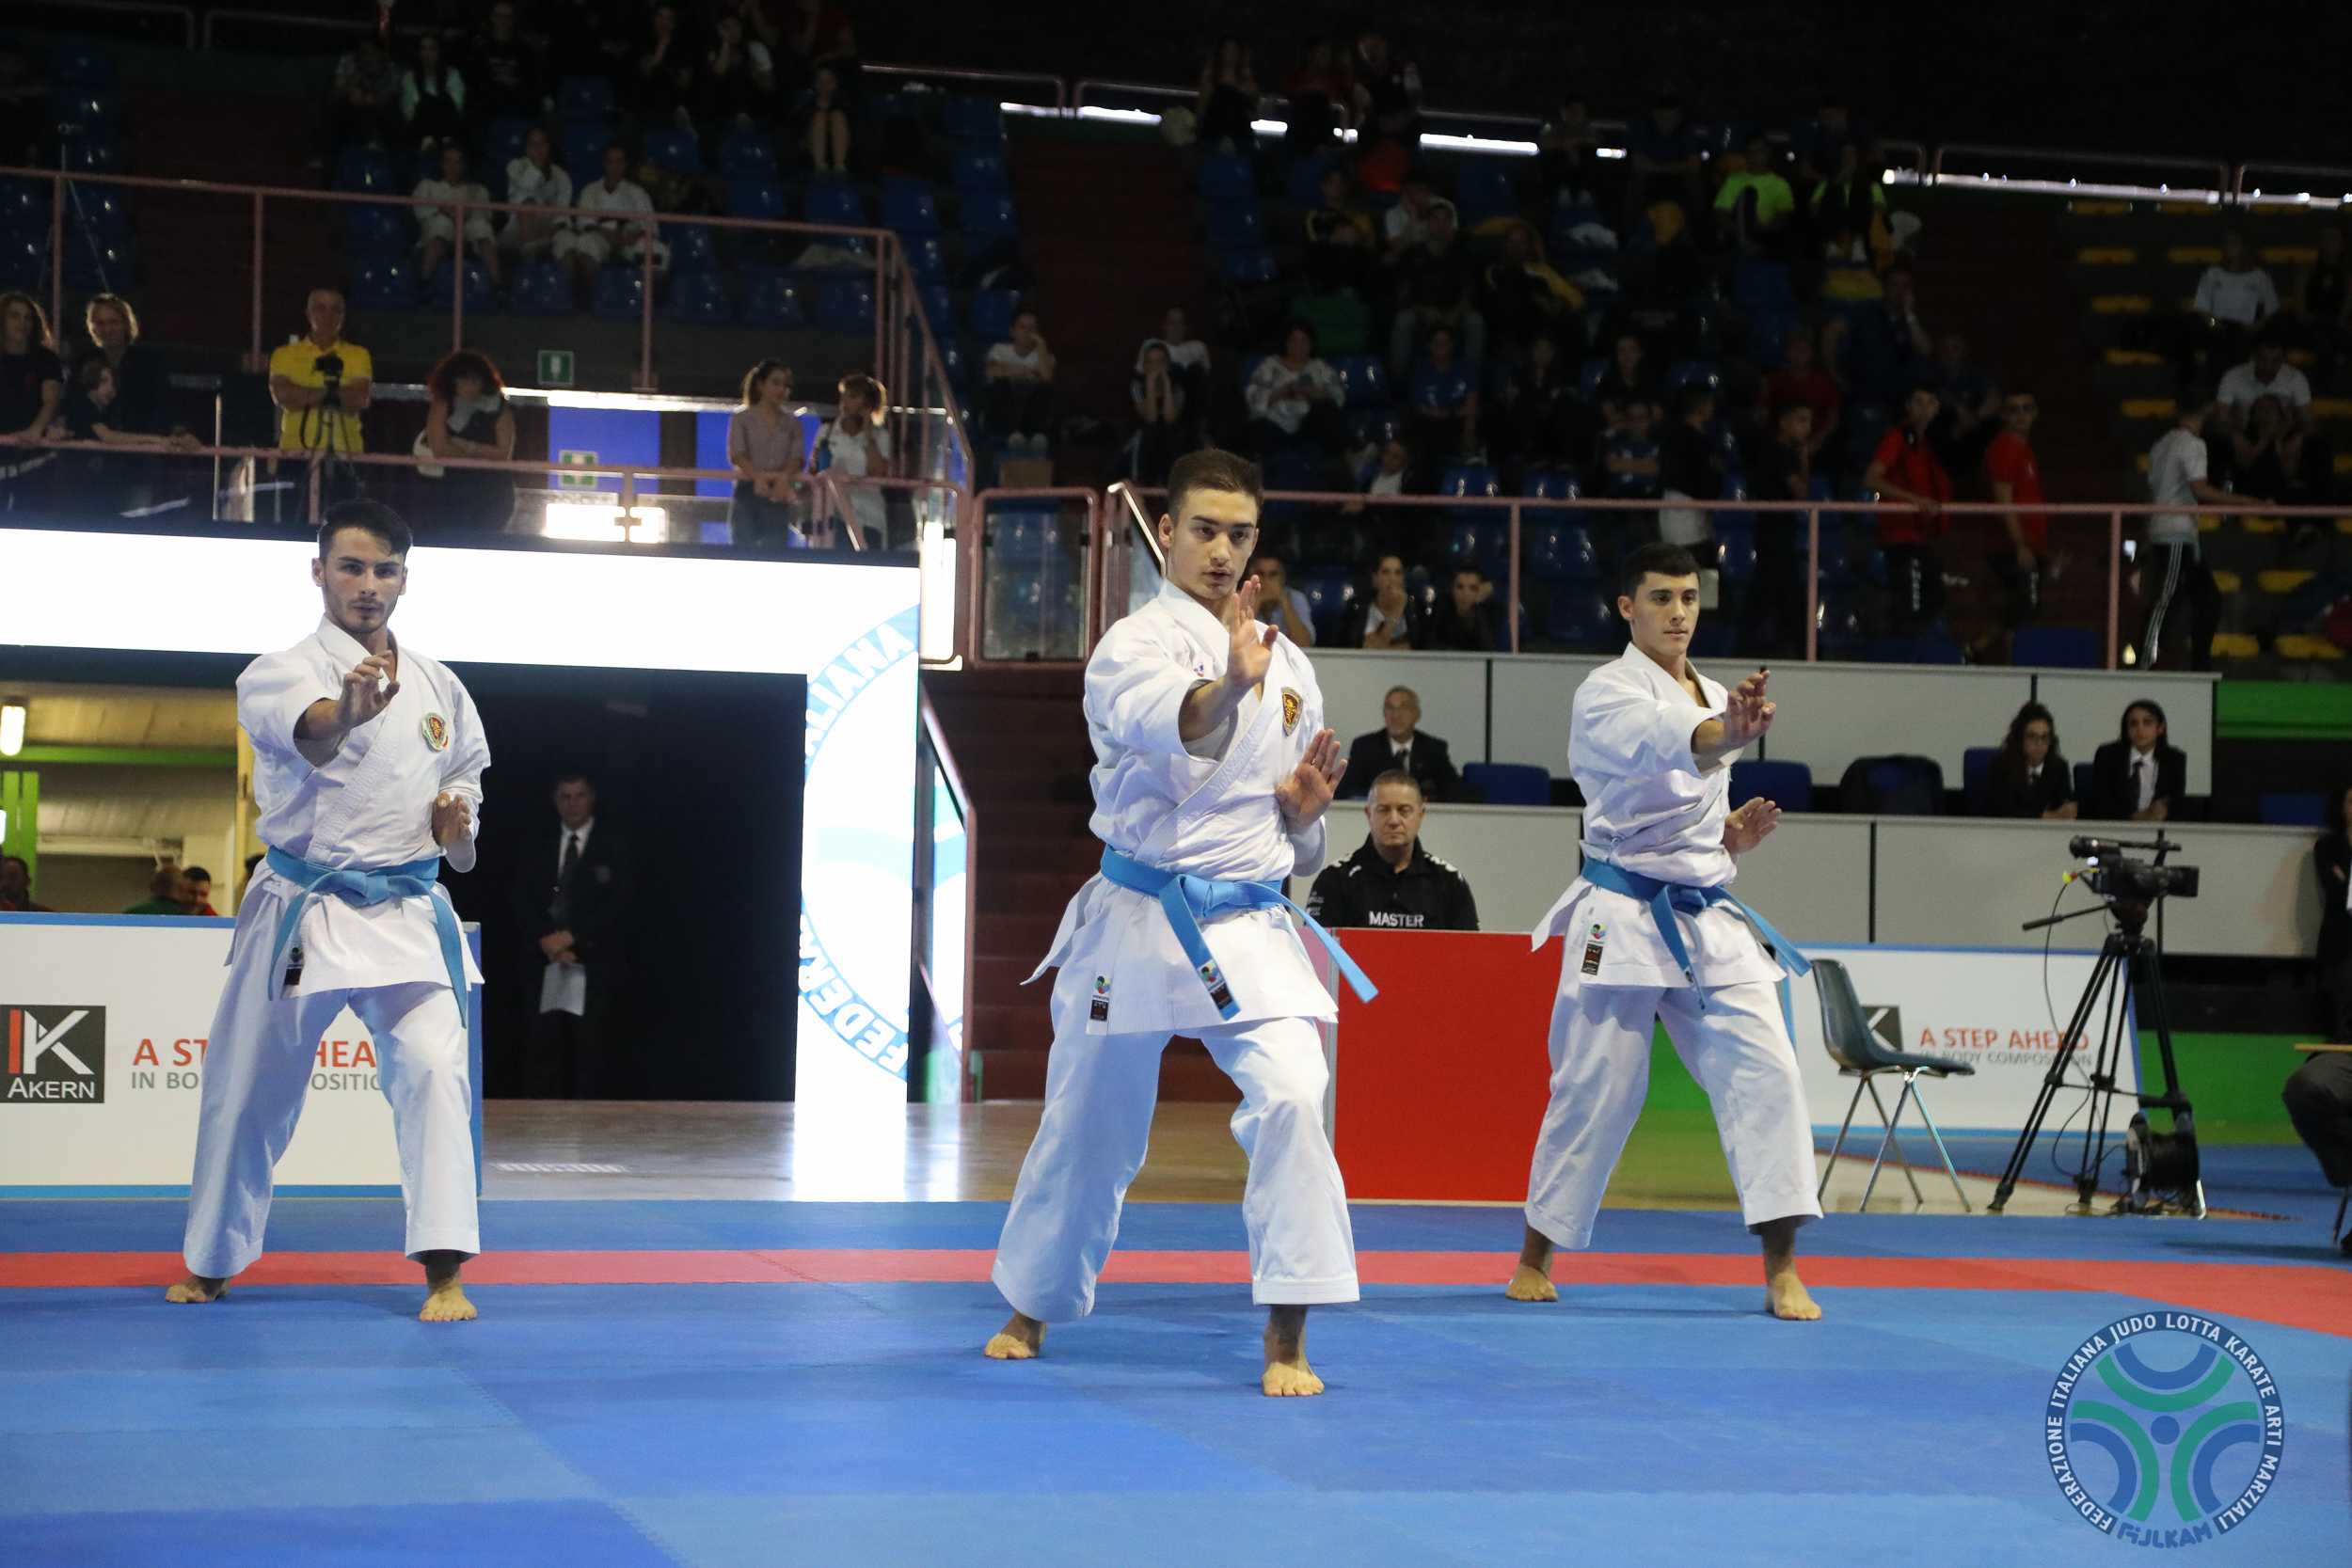 Gara Campionato Italiano, Karate Fata Morgana protagonista